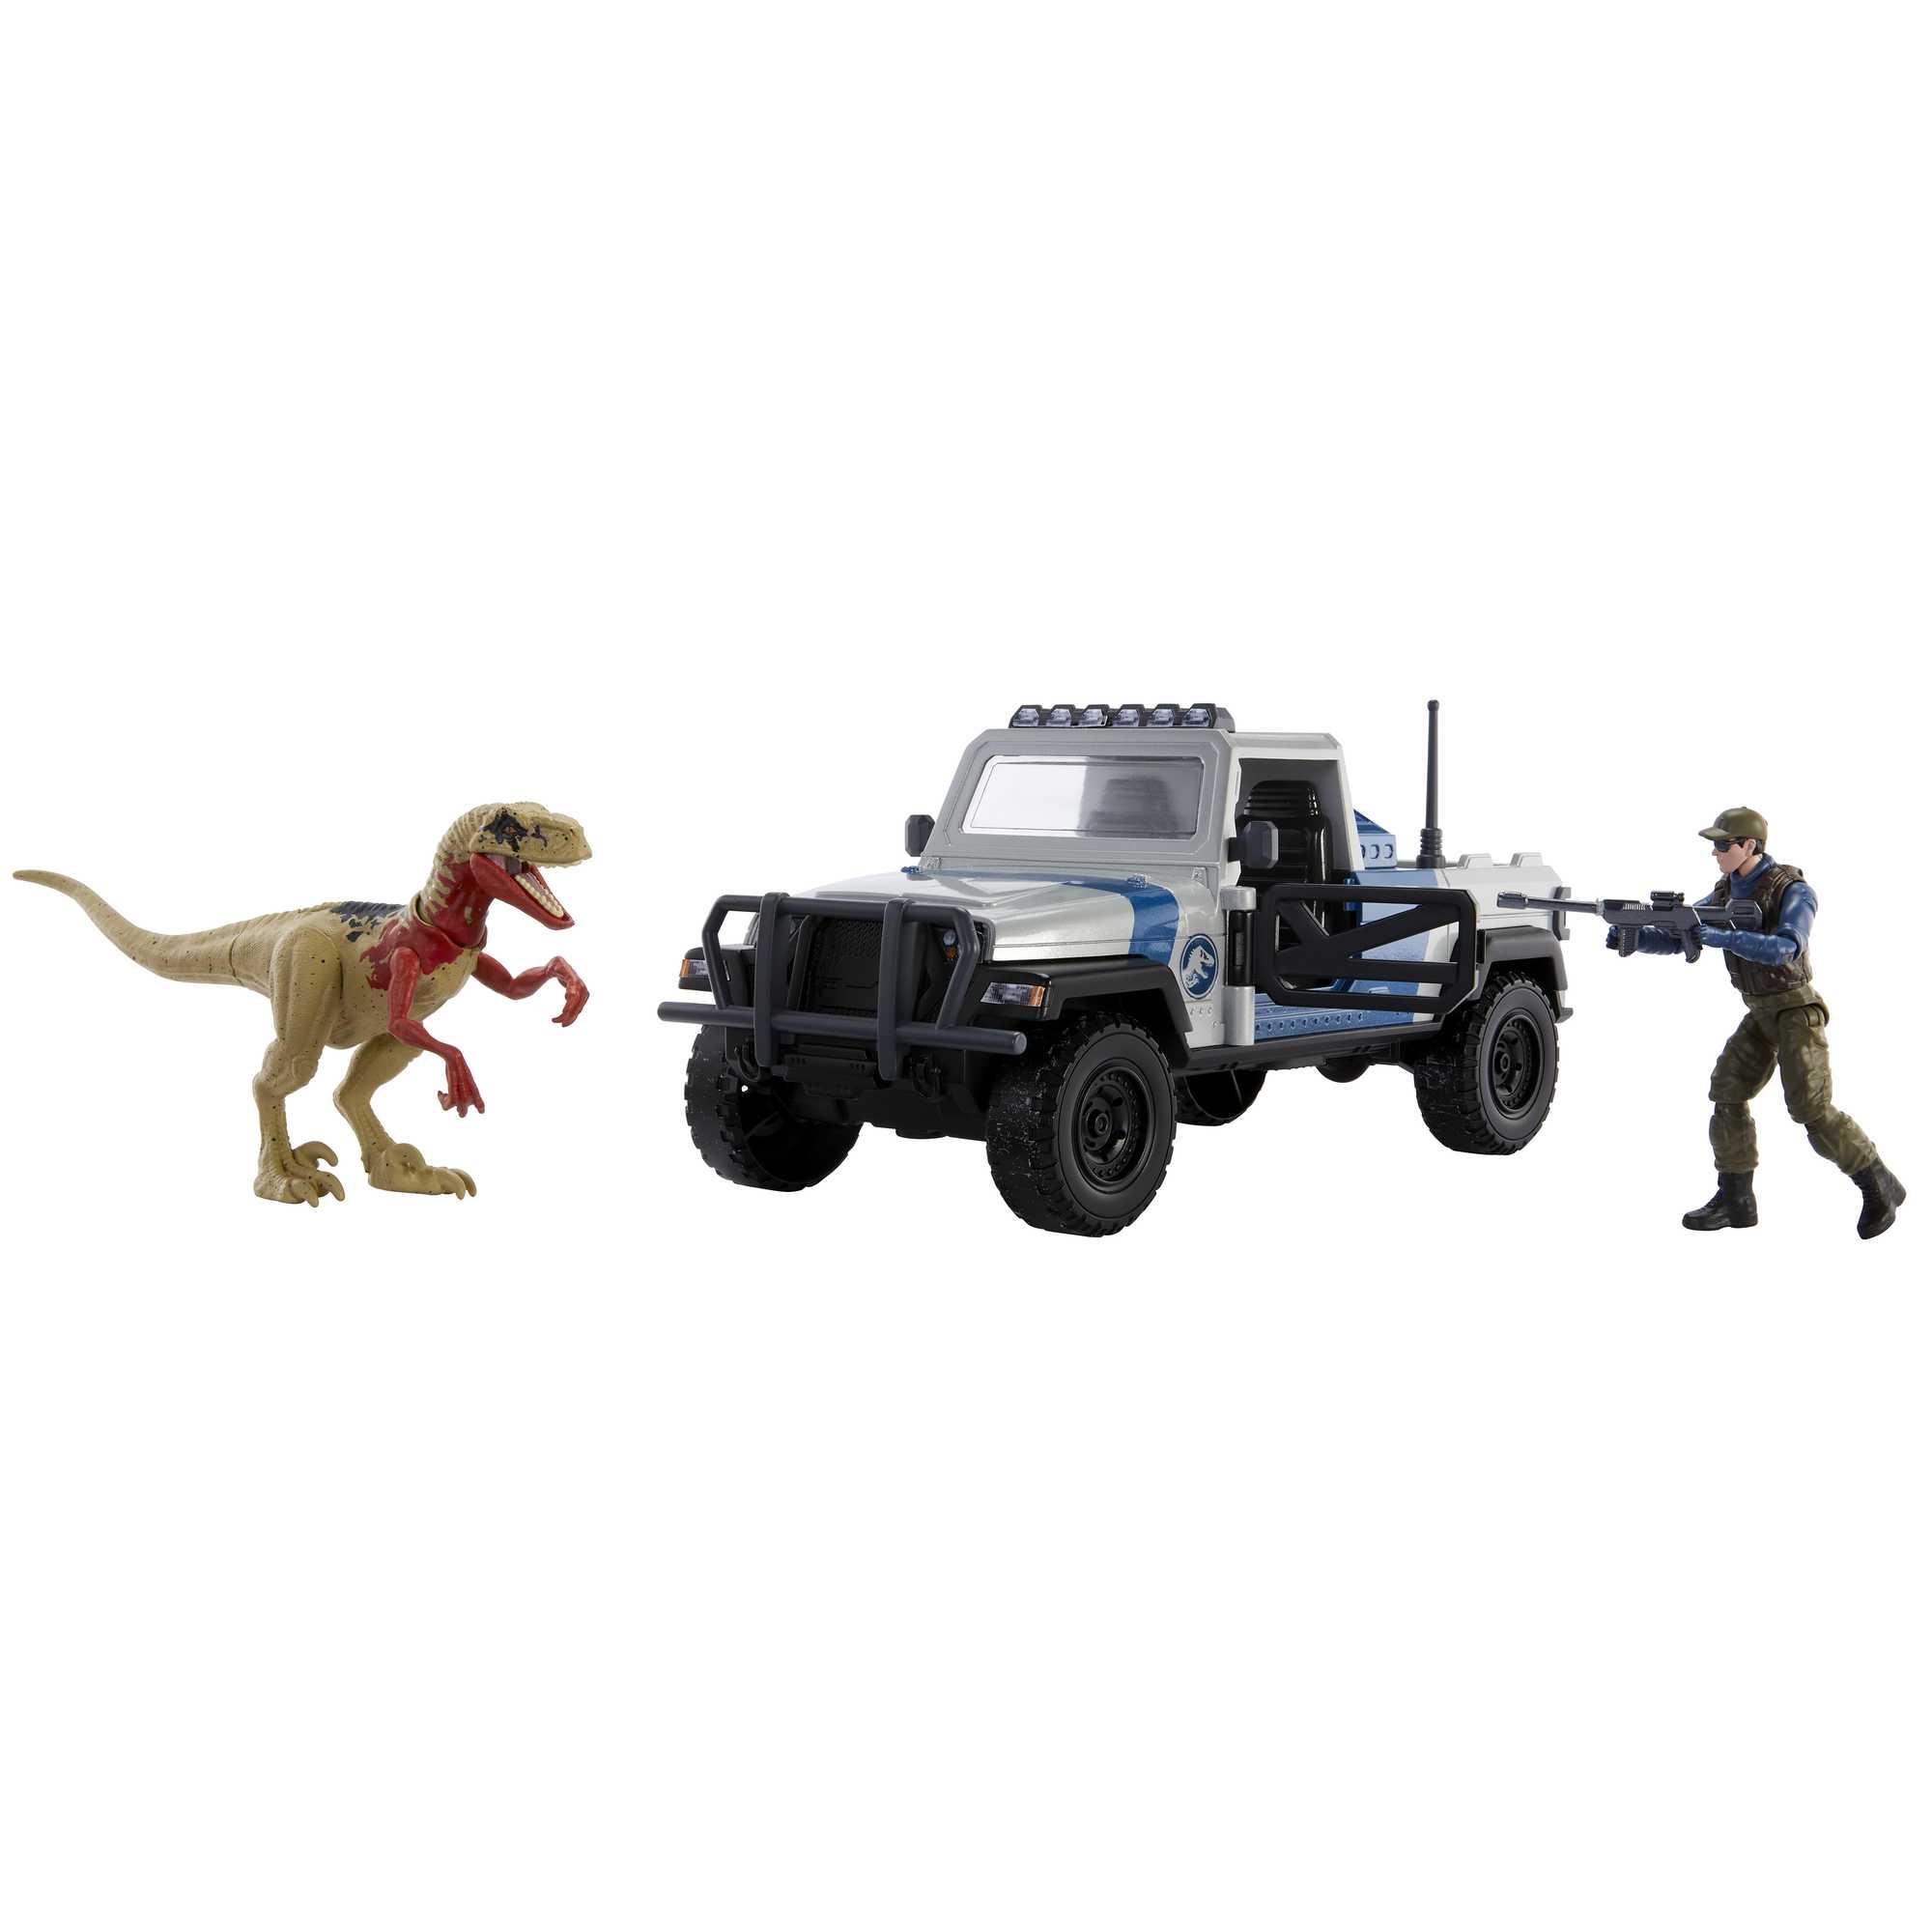 Set 20 Dinosaurios Jurassic World Mini Original Mattel